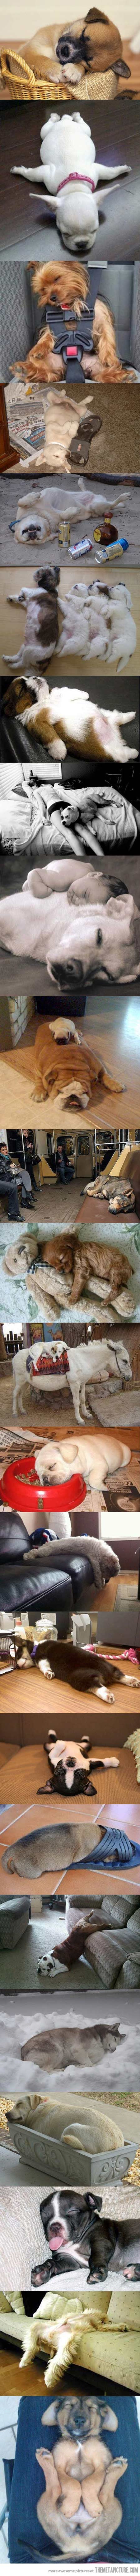 cute-dogs-asleep-floor-puppies.jpg